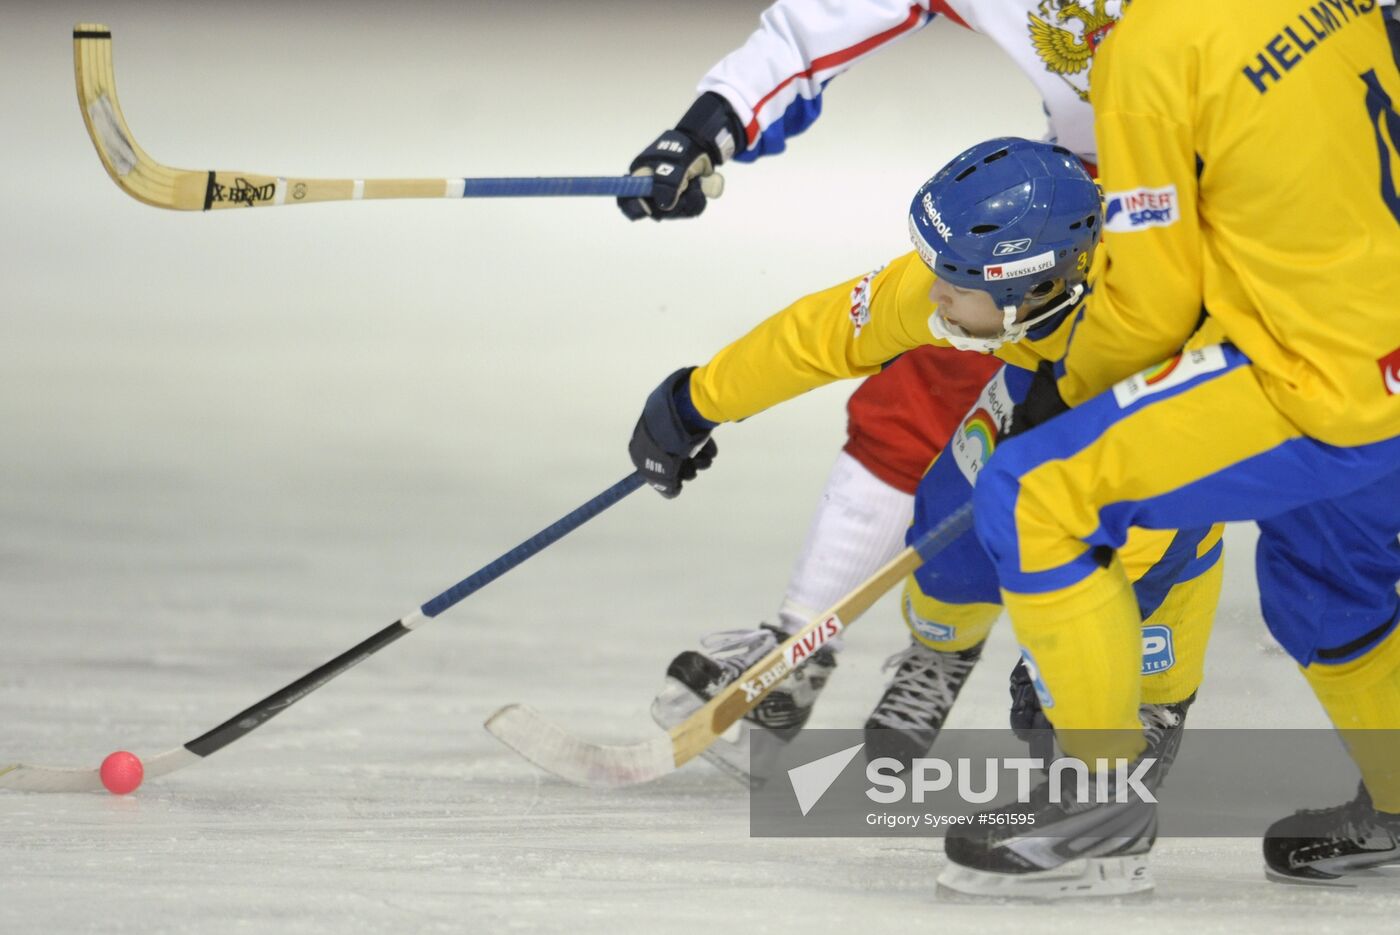 World Bandy Championship, Russia vs. Sweden